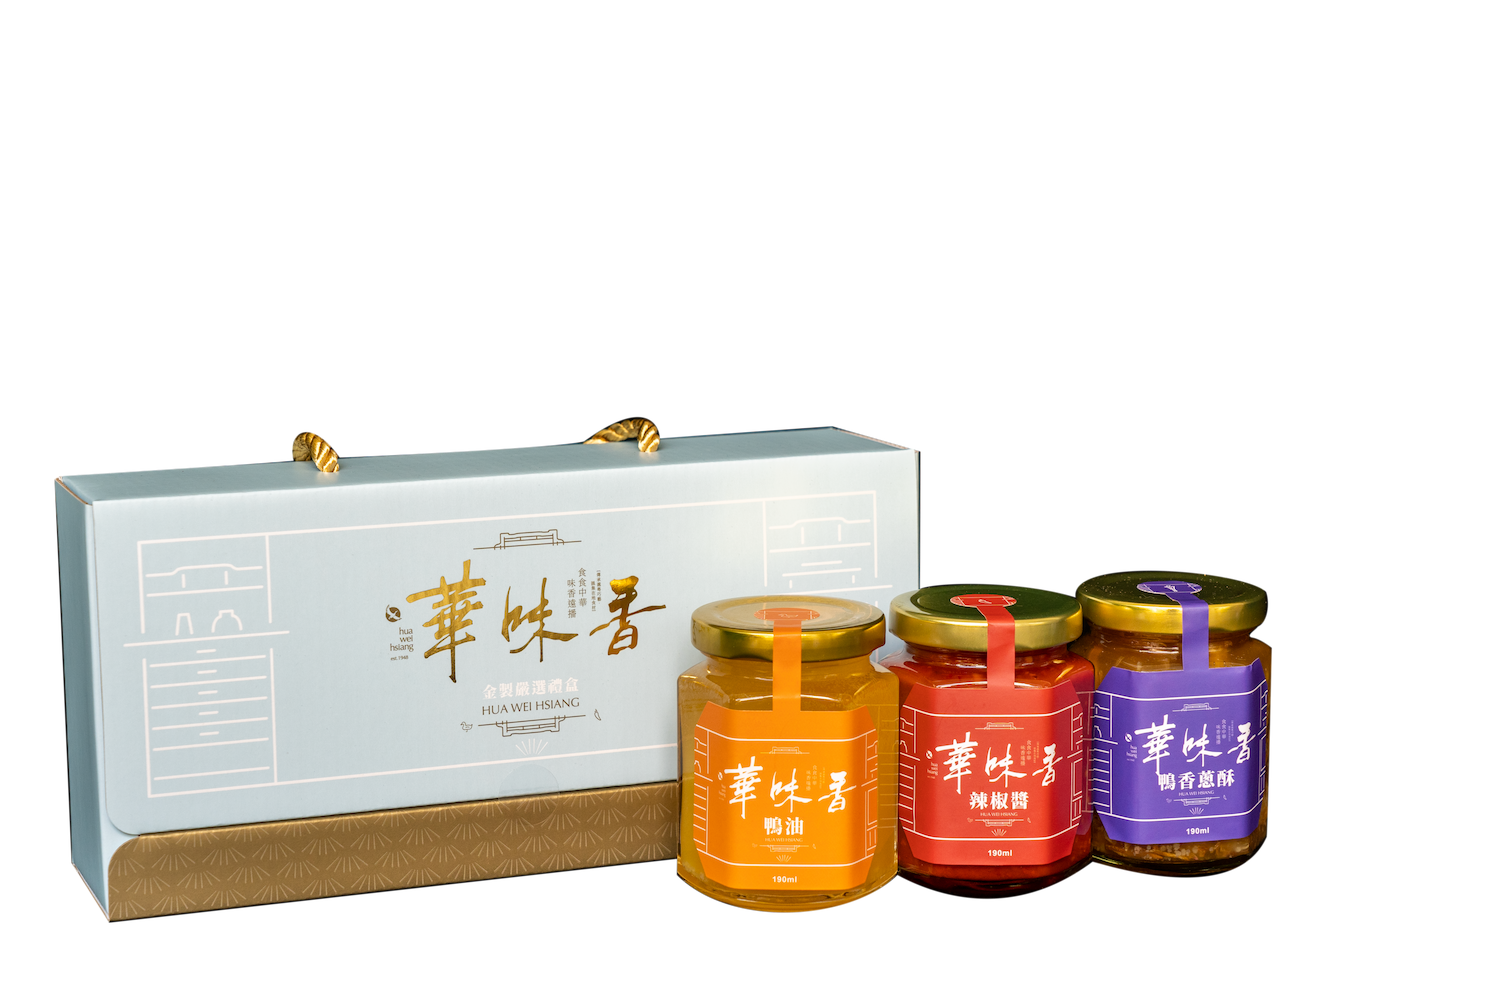 Hua Wei Hsiang Golden Selected Gift Box